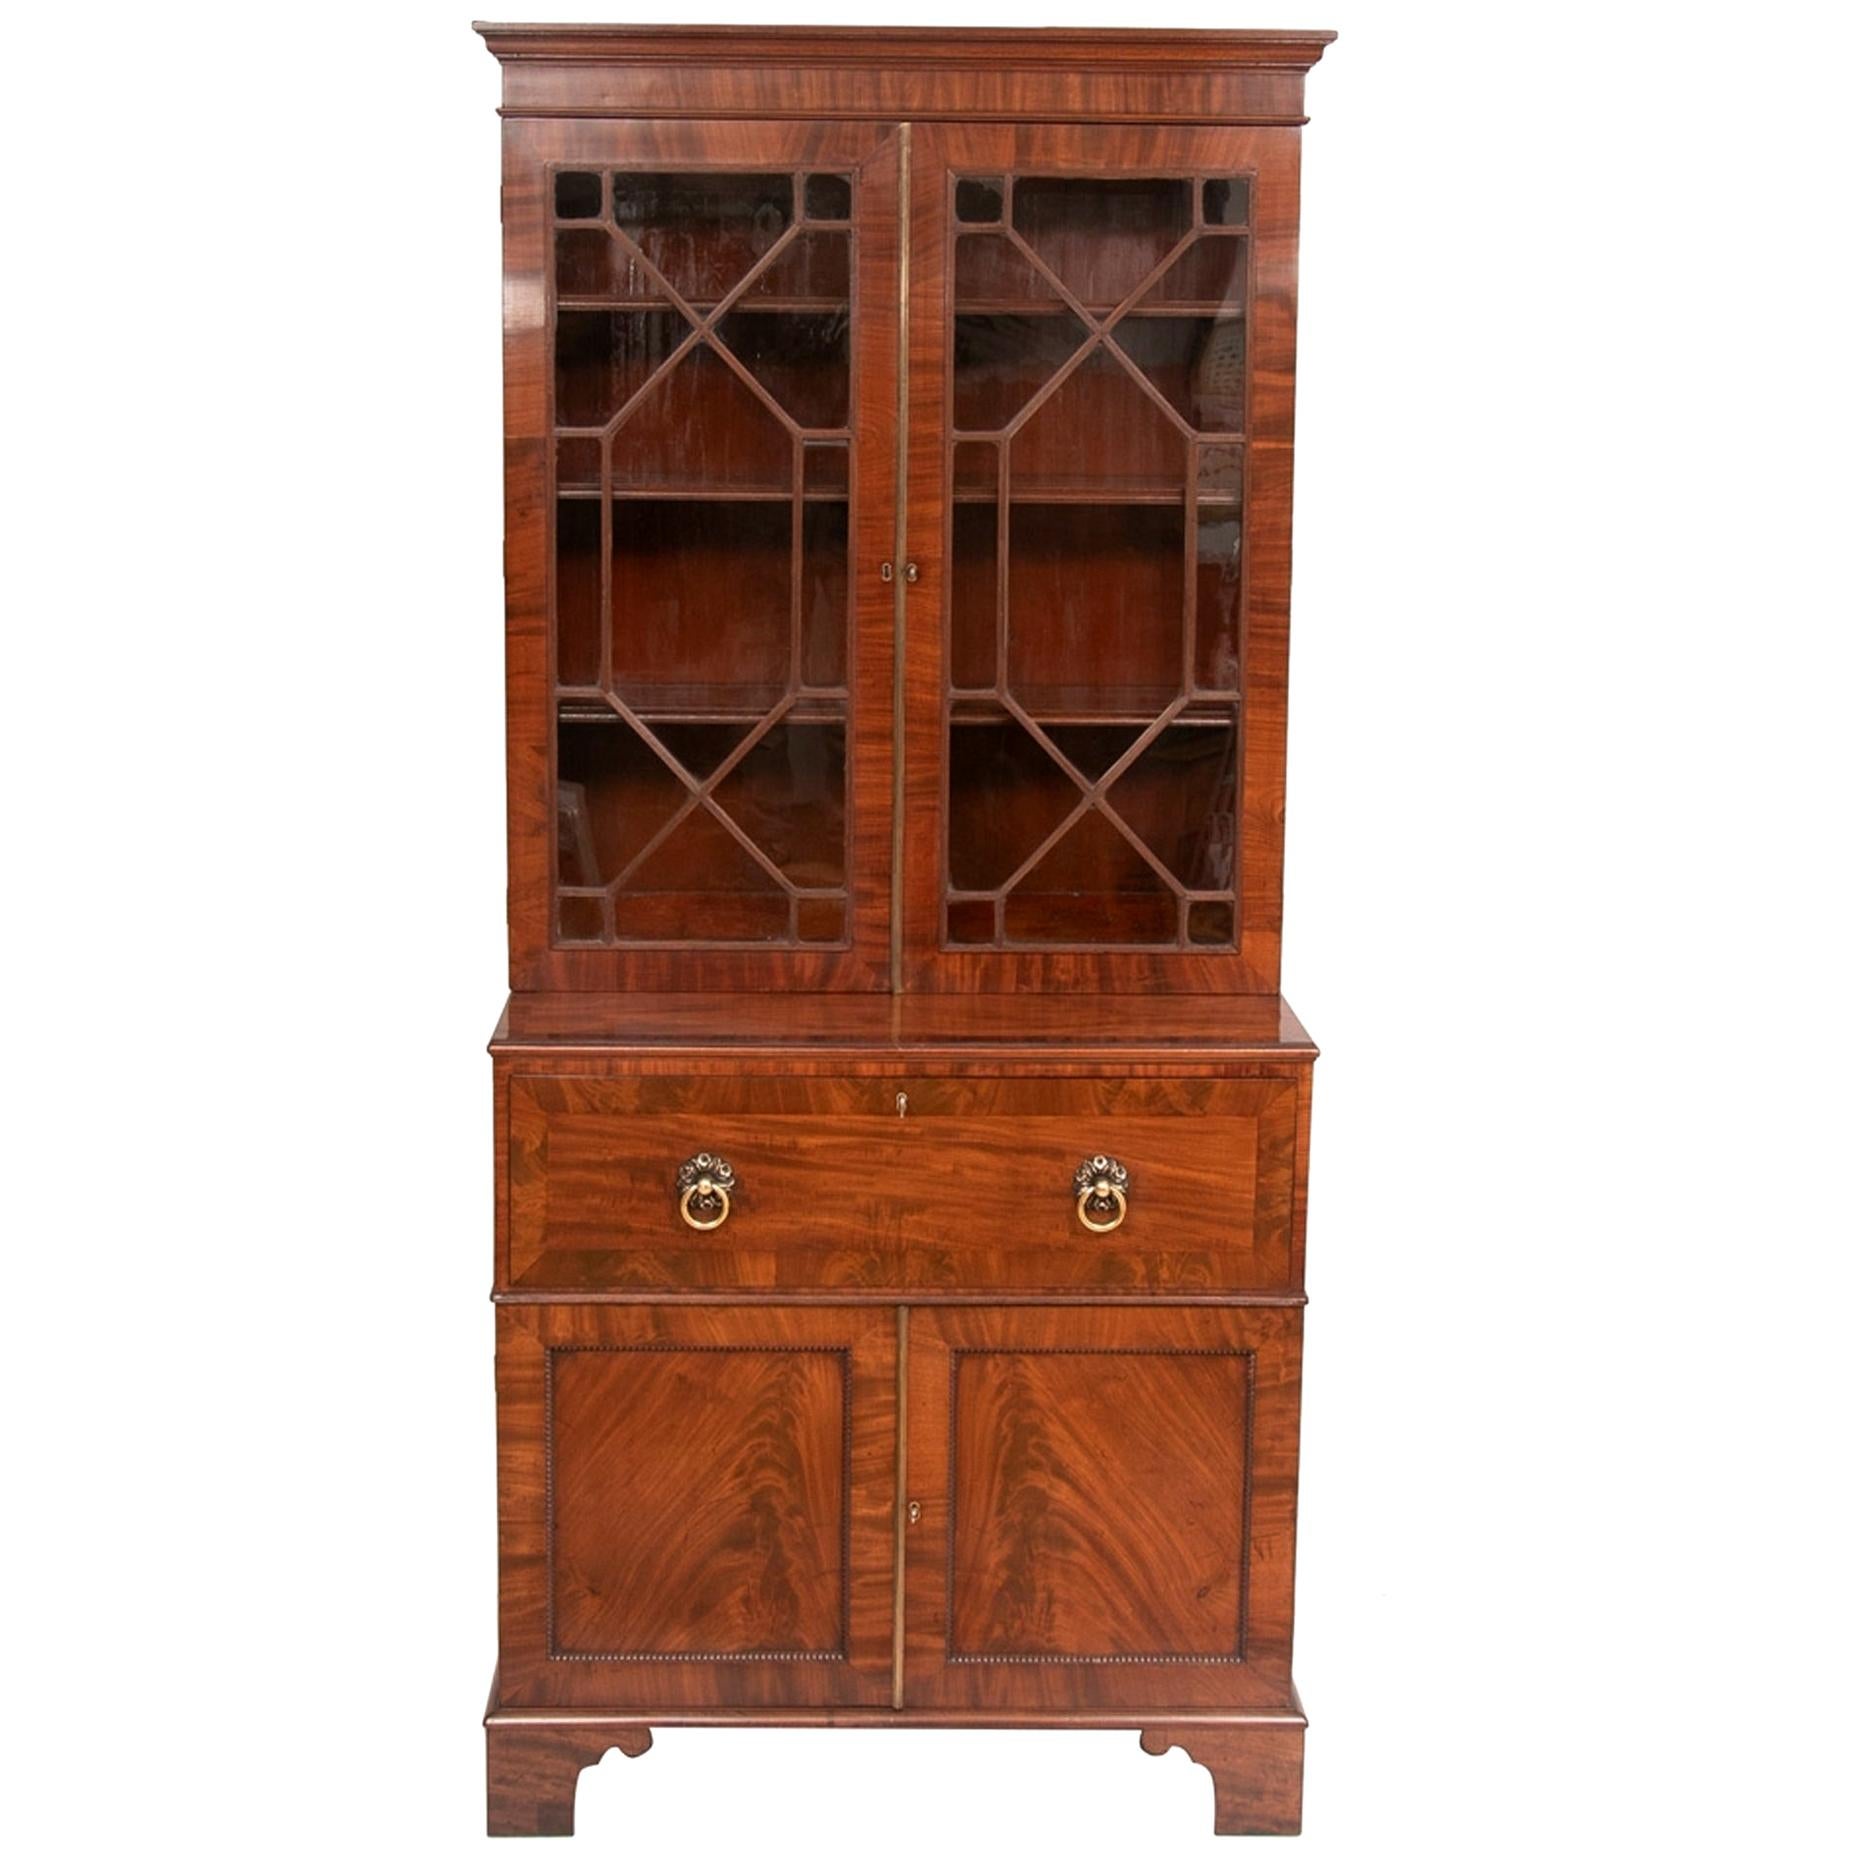 Small Early Georgian 1780-1800 Mahogany Secretaire Bureau Bookcase